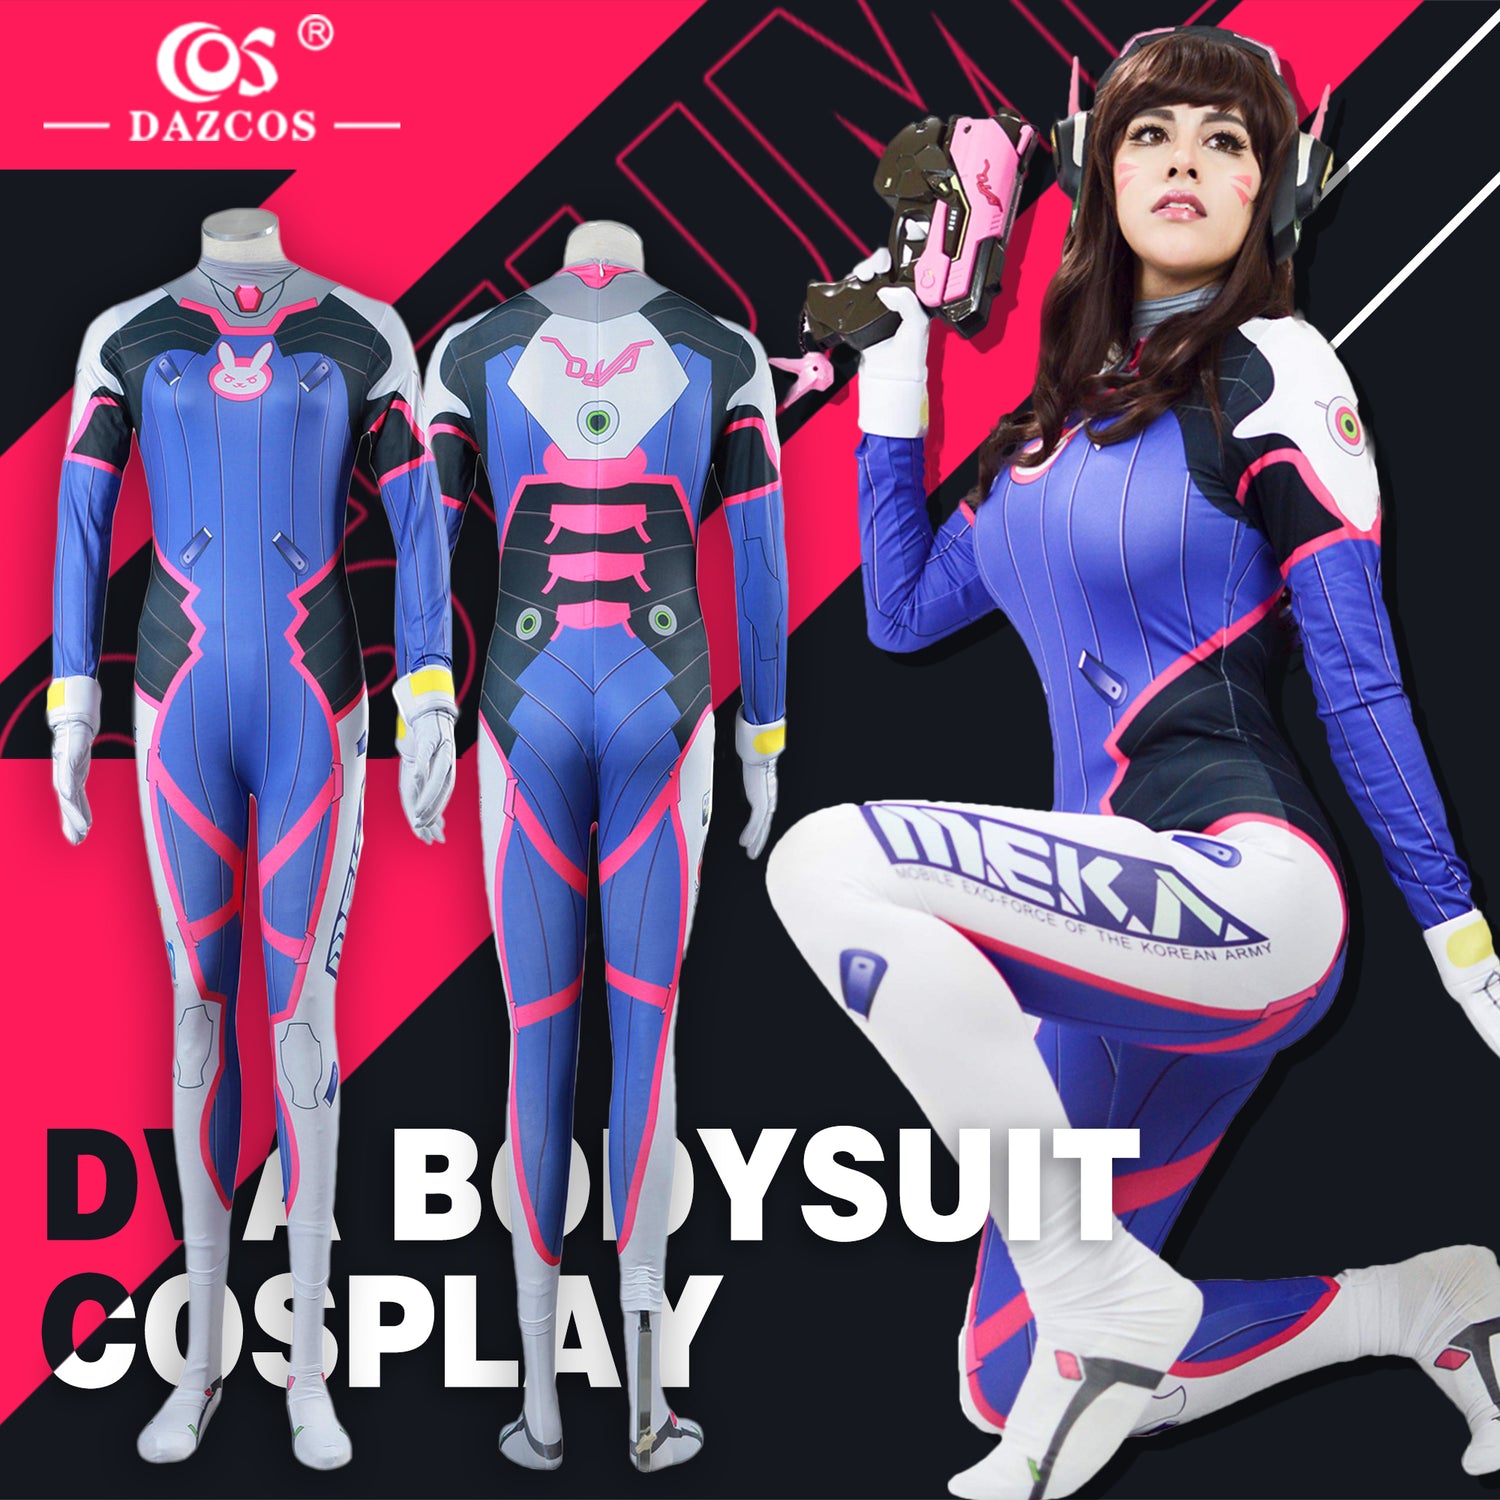 DVa bodysuit cosplay